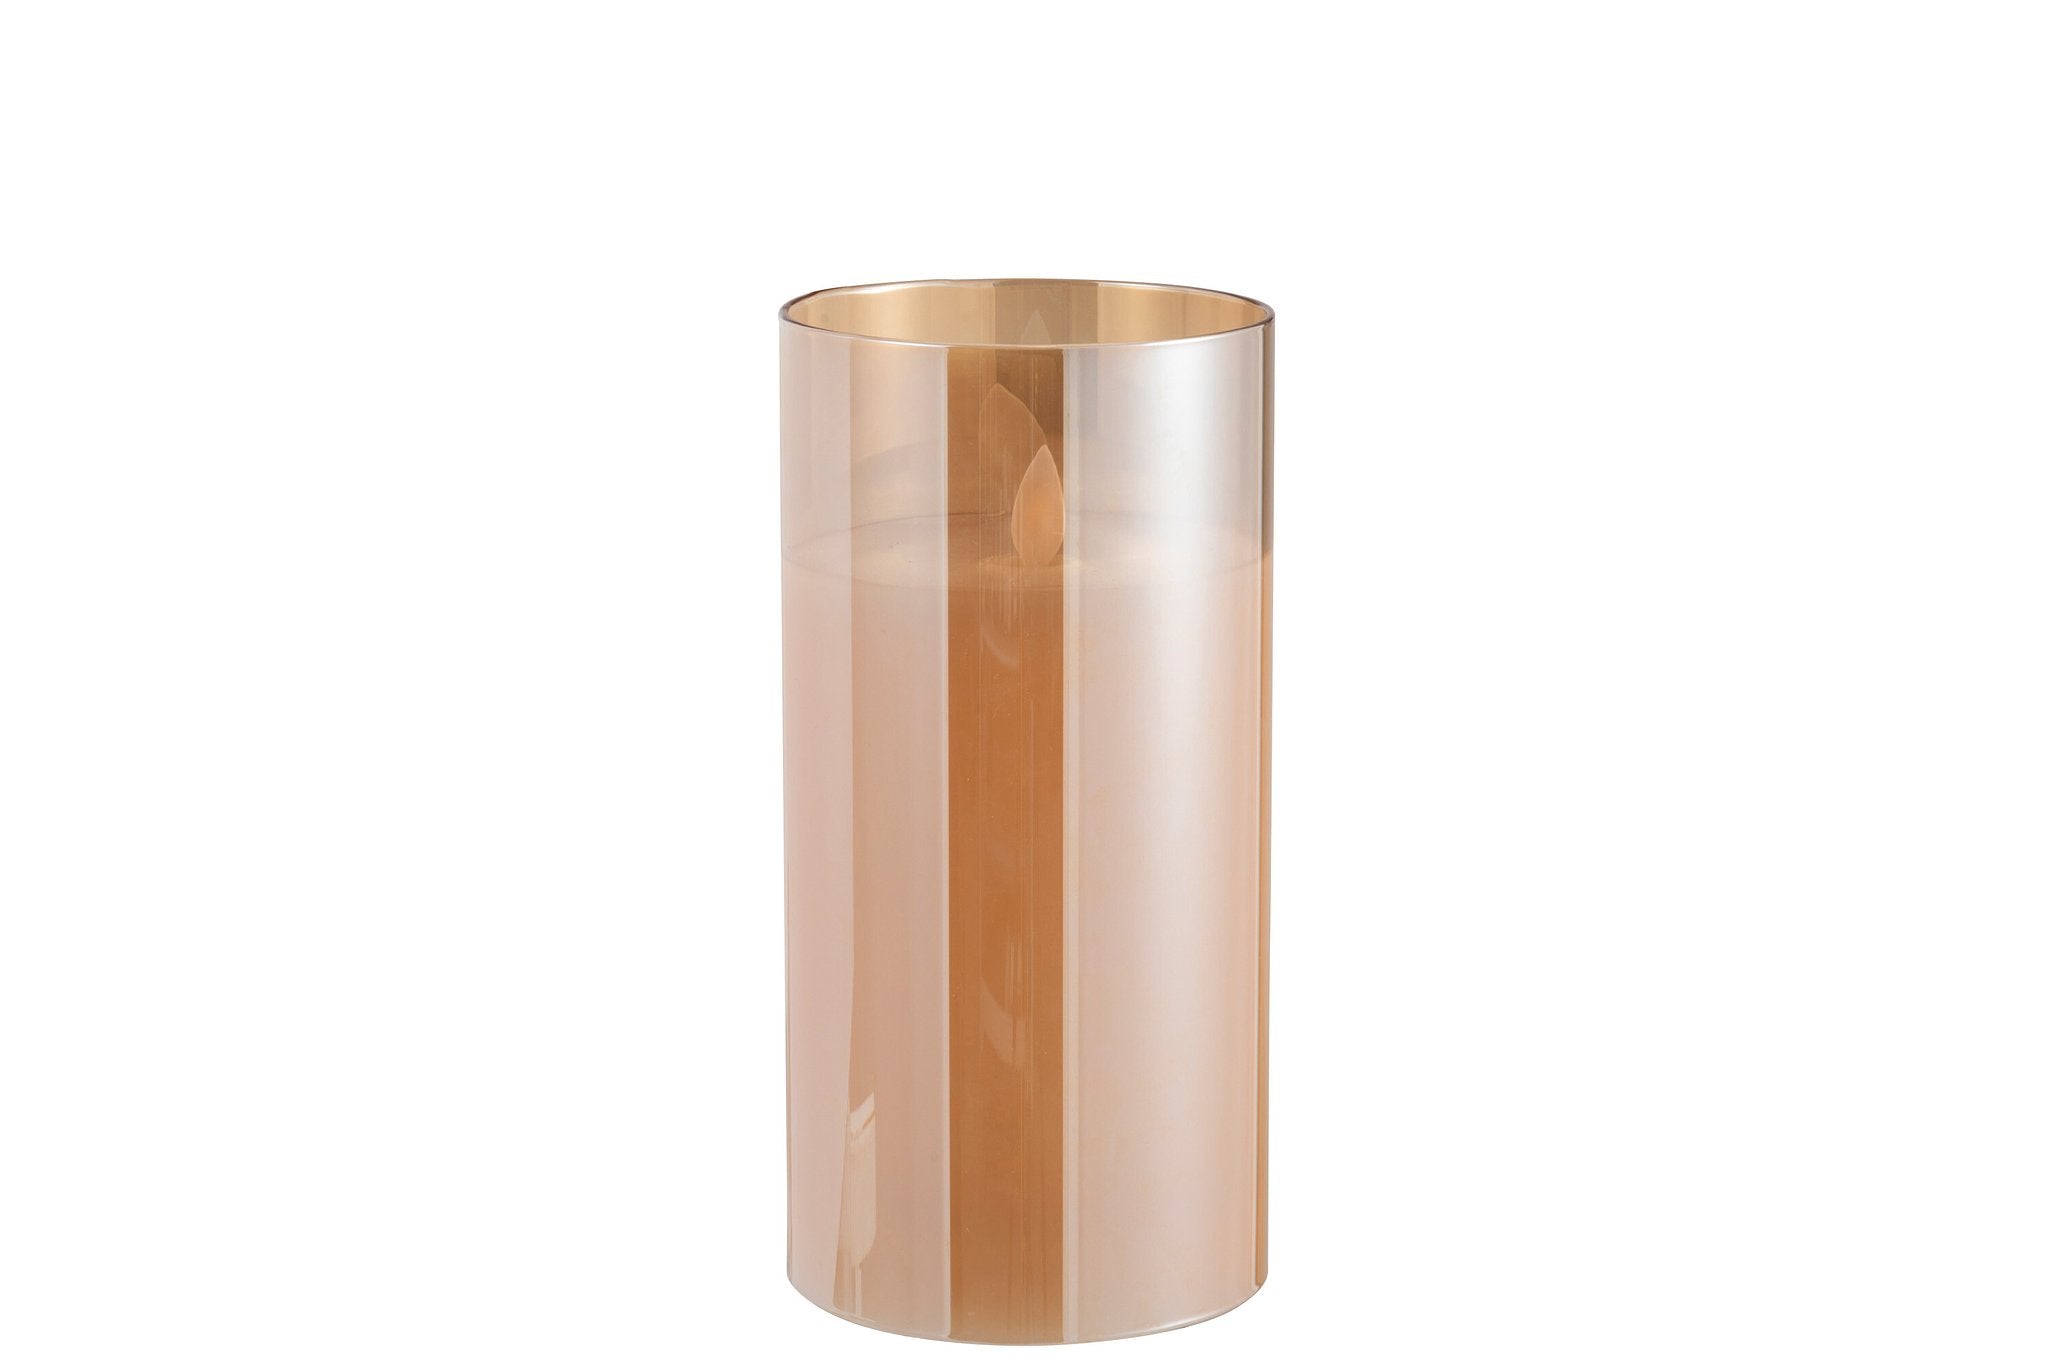 J-Line Ledlamp Blinkend Glas Goud Medium